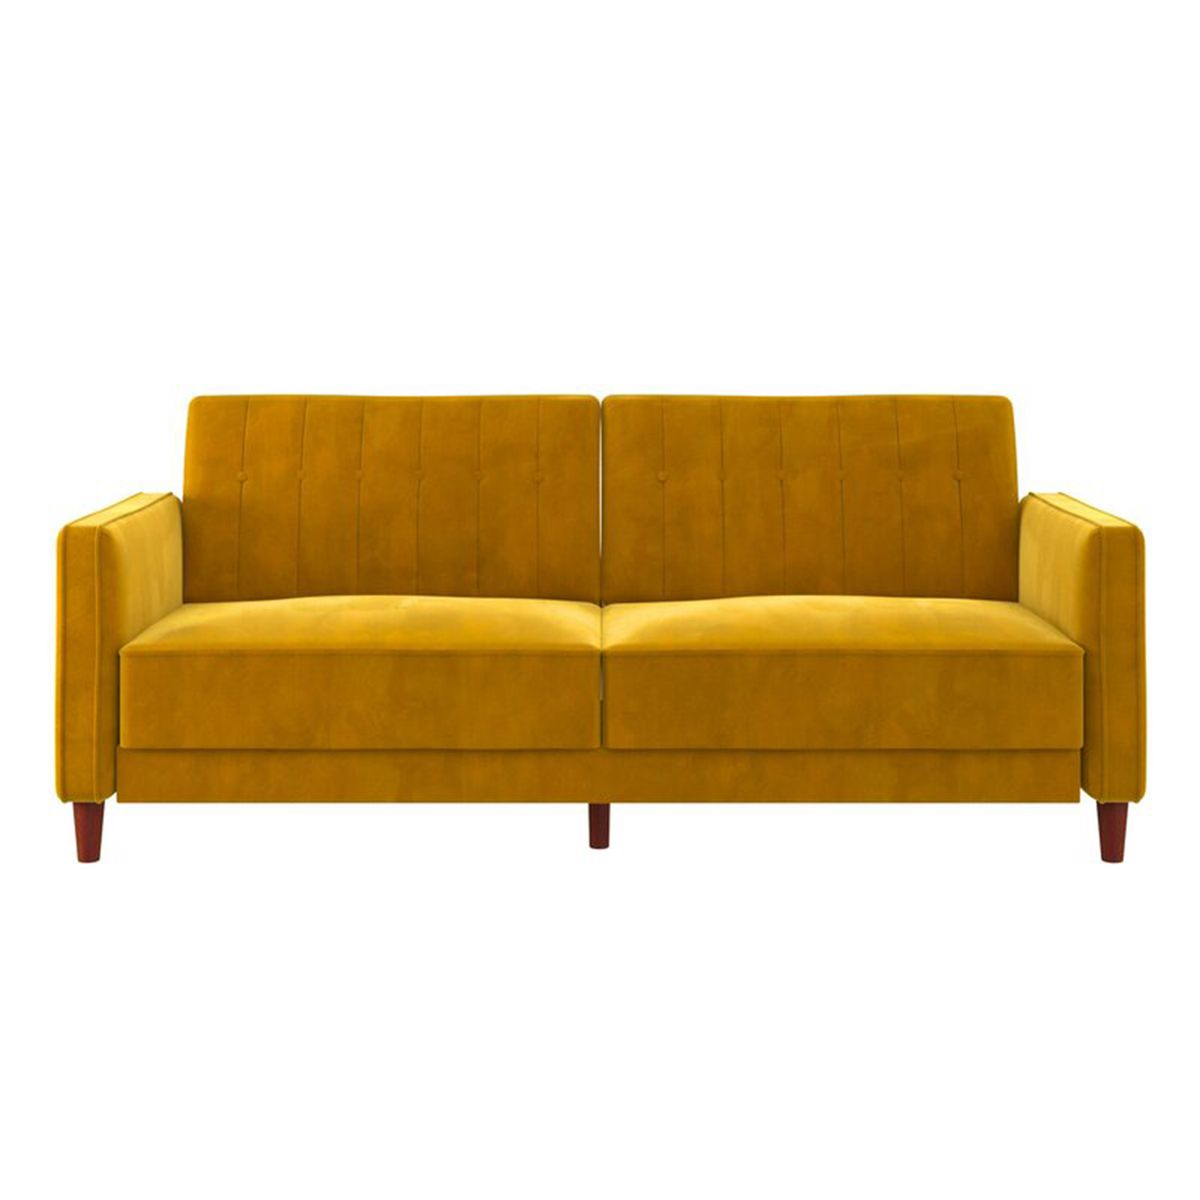 Wallace Convertible Sofa